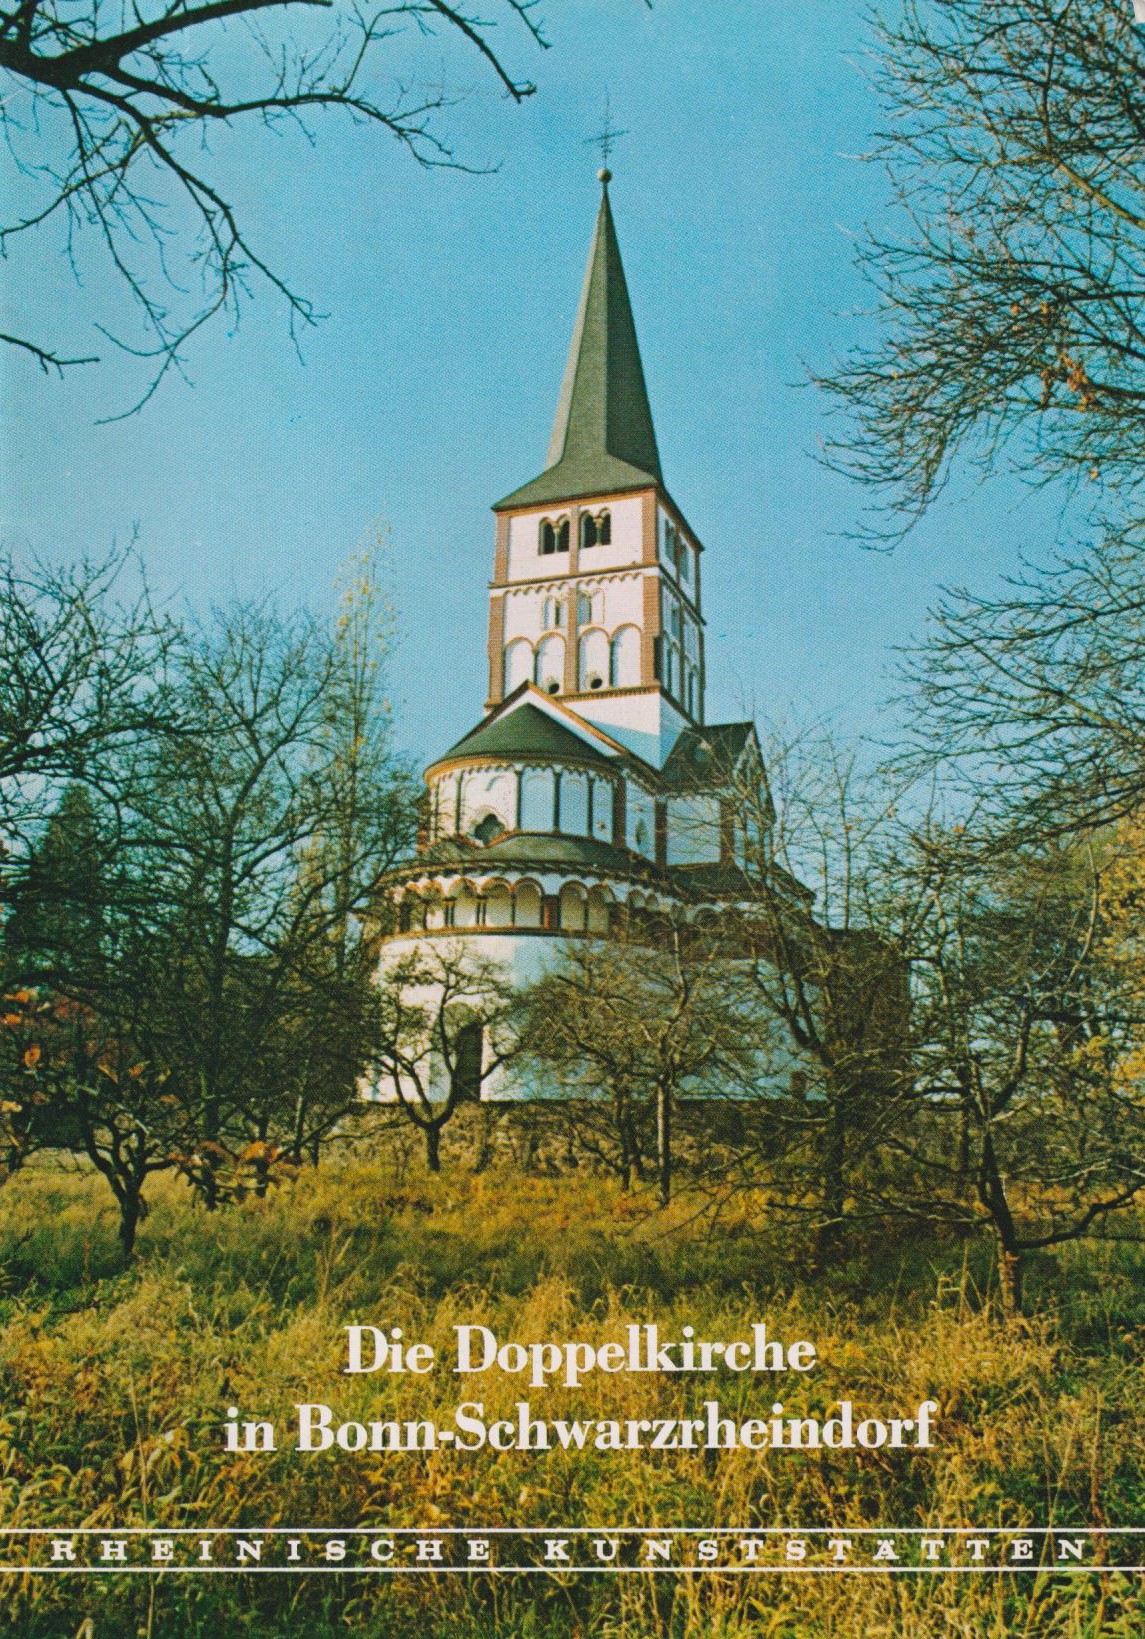 Die Doppelkirche in Bonn-Schwarzrheindorf. (Serie: Rheinische Kunststätten, Heft 93). - Verbeek, Albert